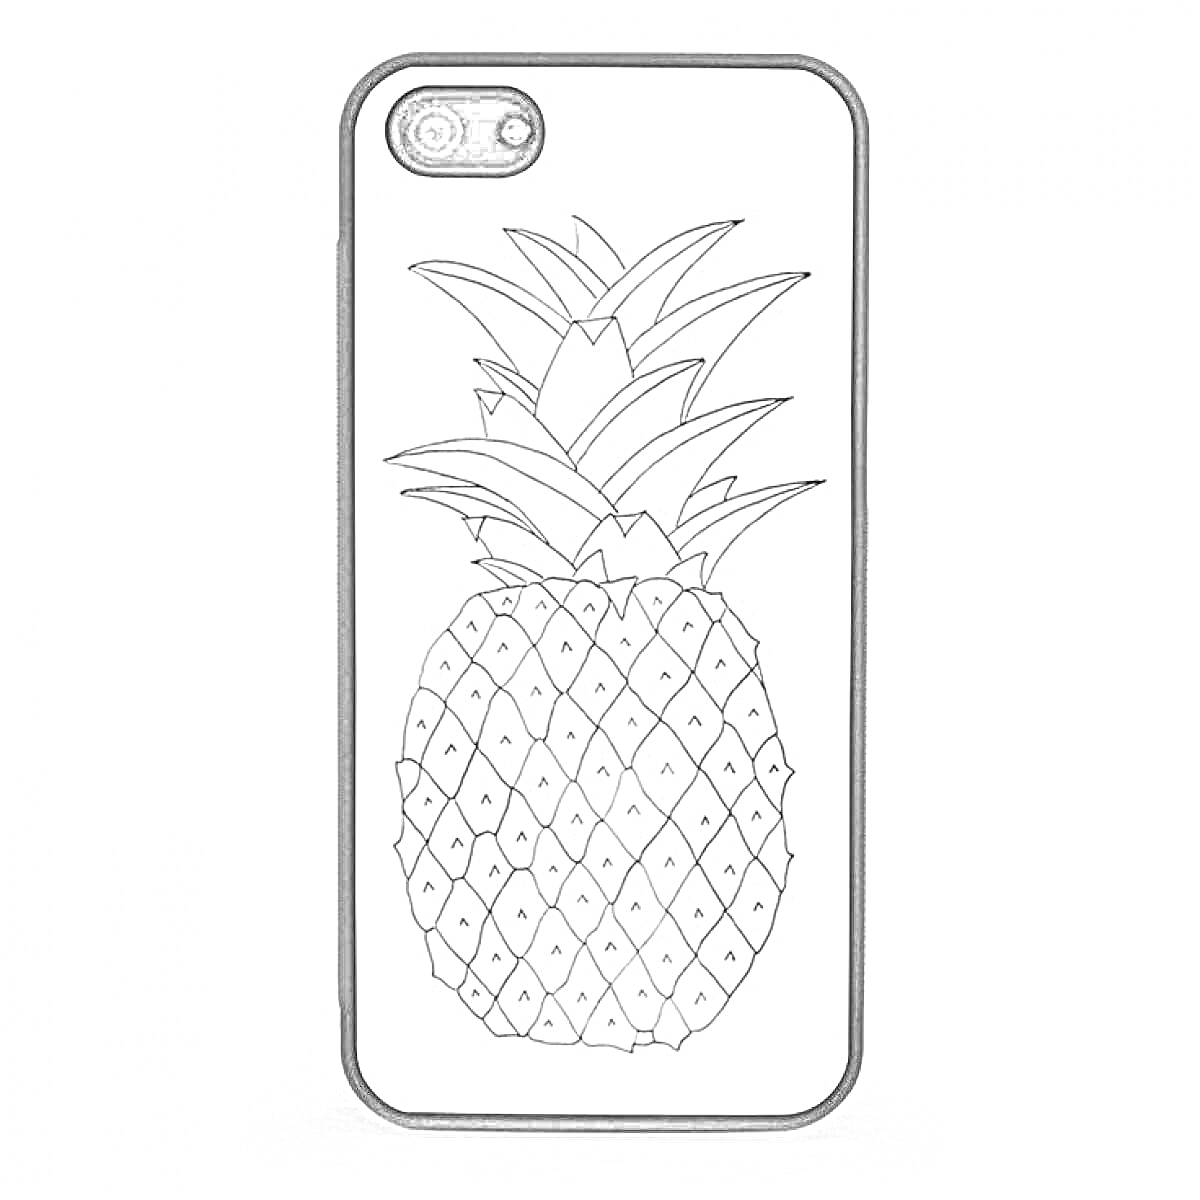 РаскраскаЧехол для айфона с рисунком ананаса